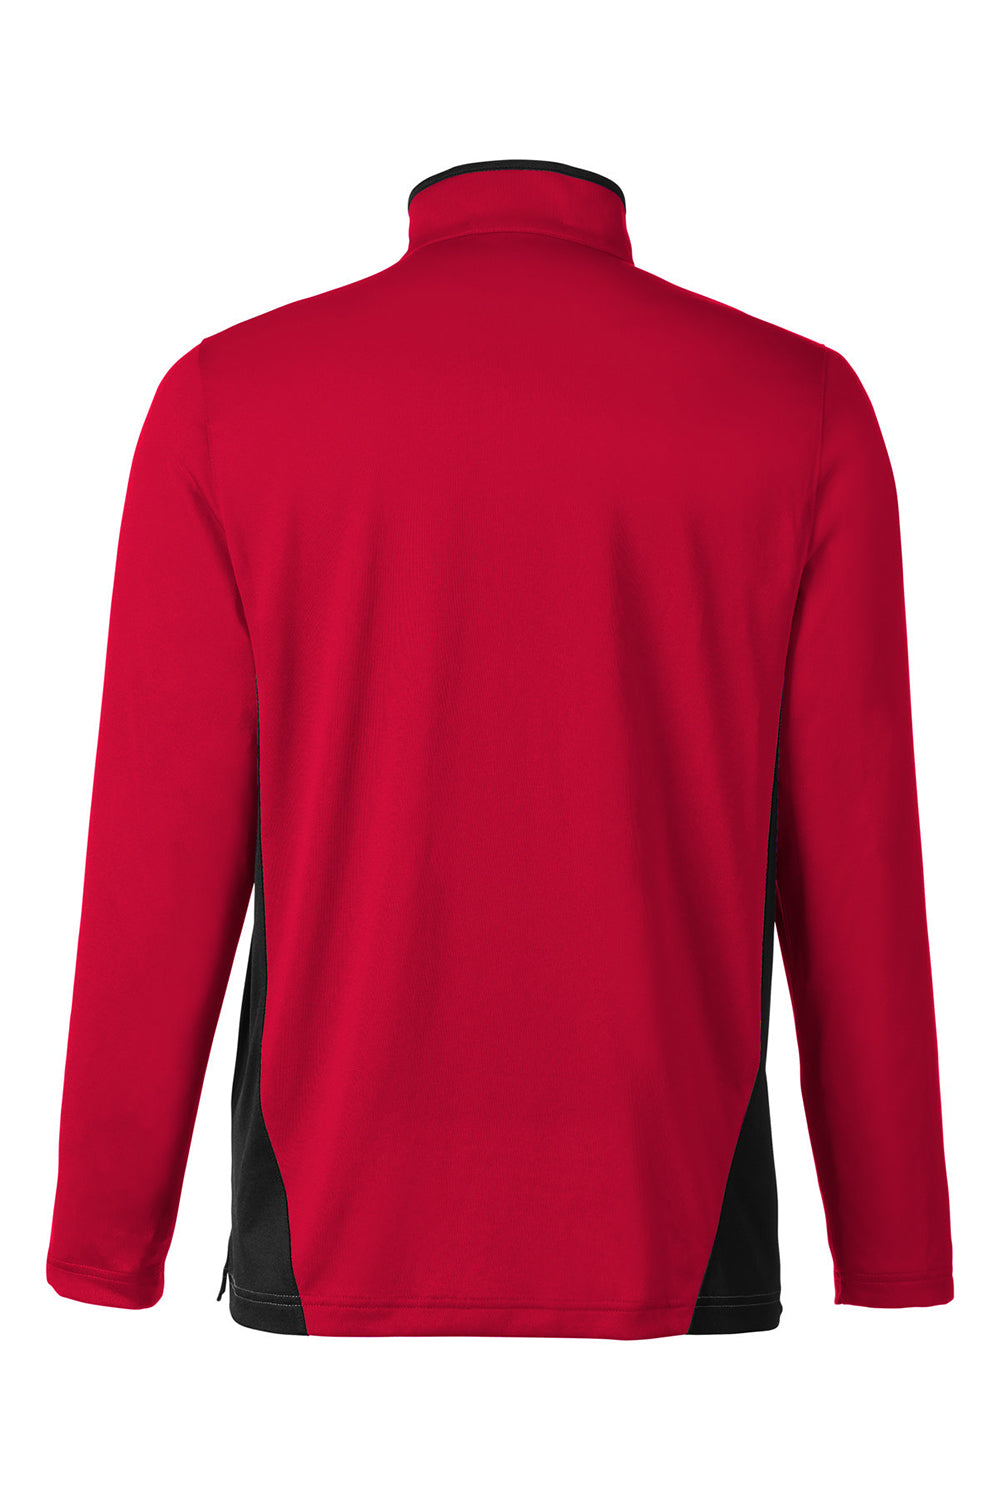 Harriton M786 Mens Flash Performance Moisture Wicking Colorblock 1/4 Zip Sweatshirt Red/Black Flat Back